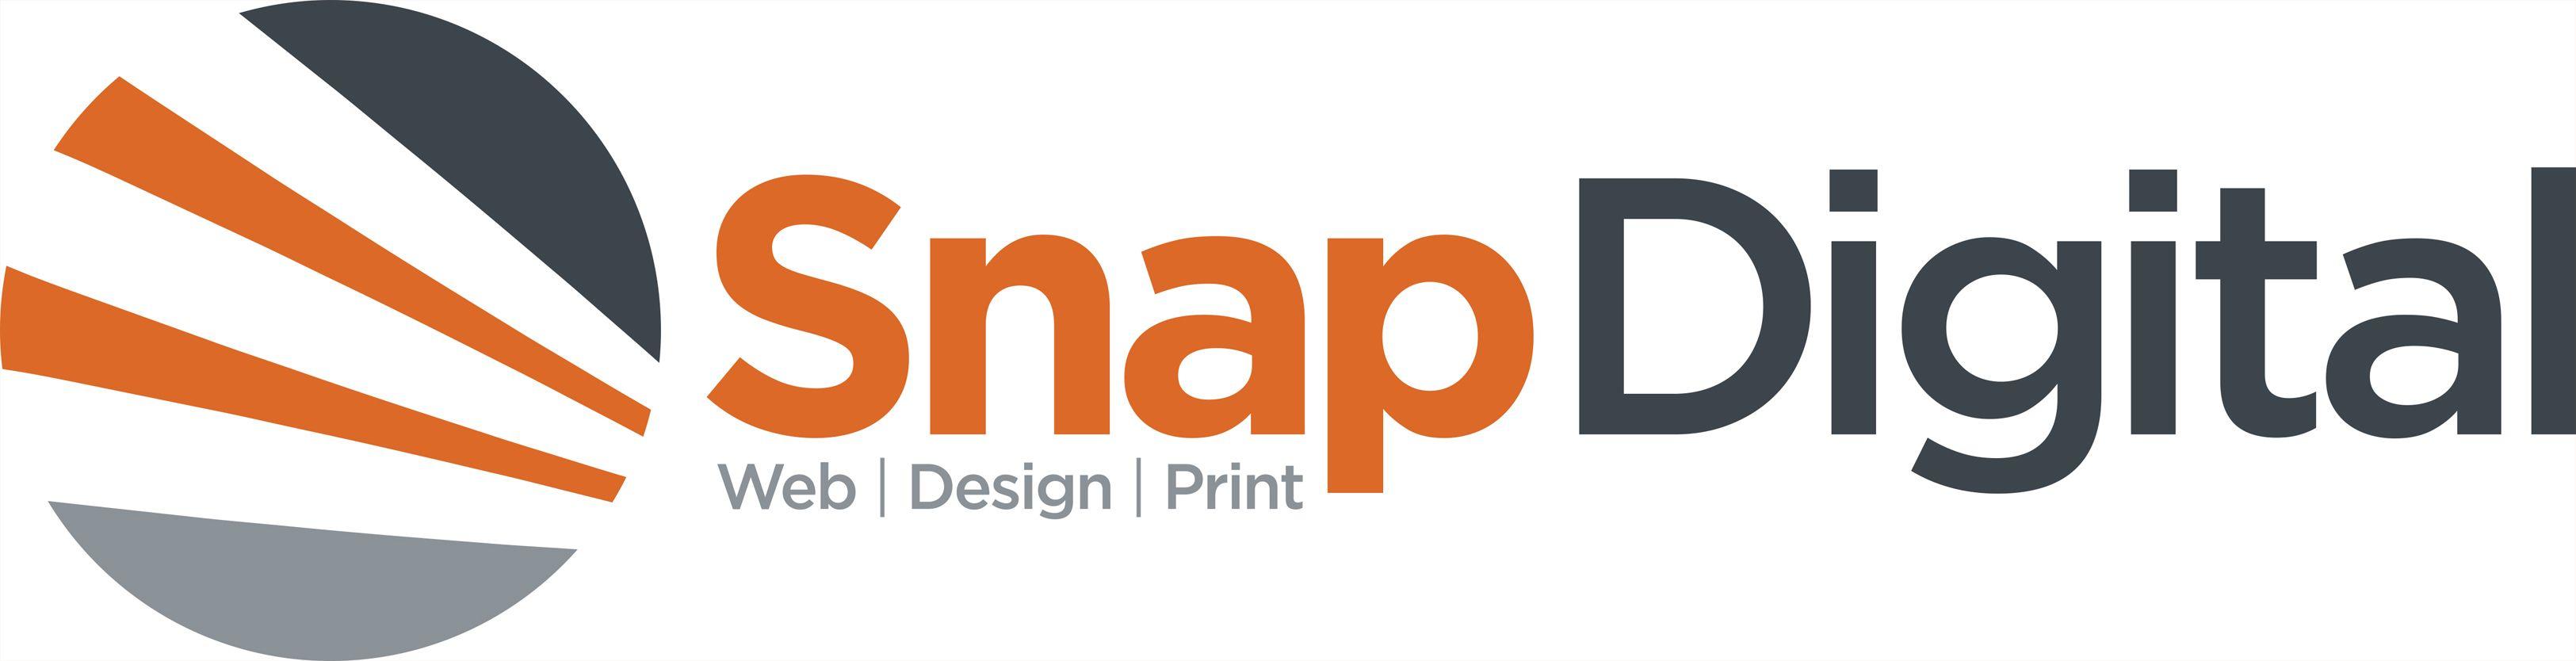 Web Digital Logo - Snap Digital :: Web, Design, Print